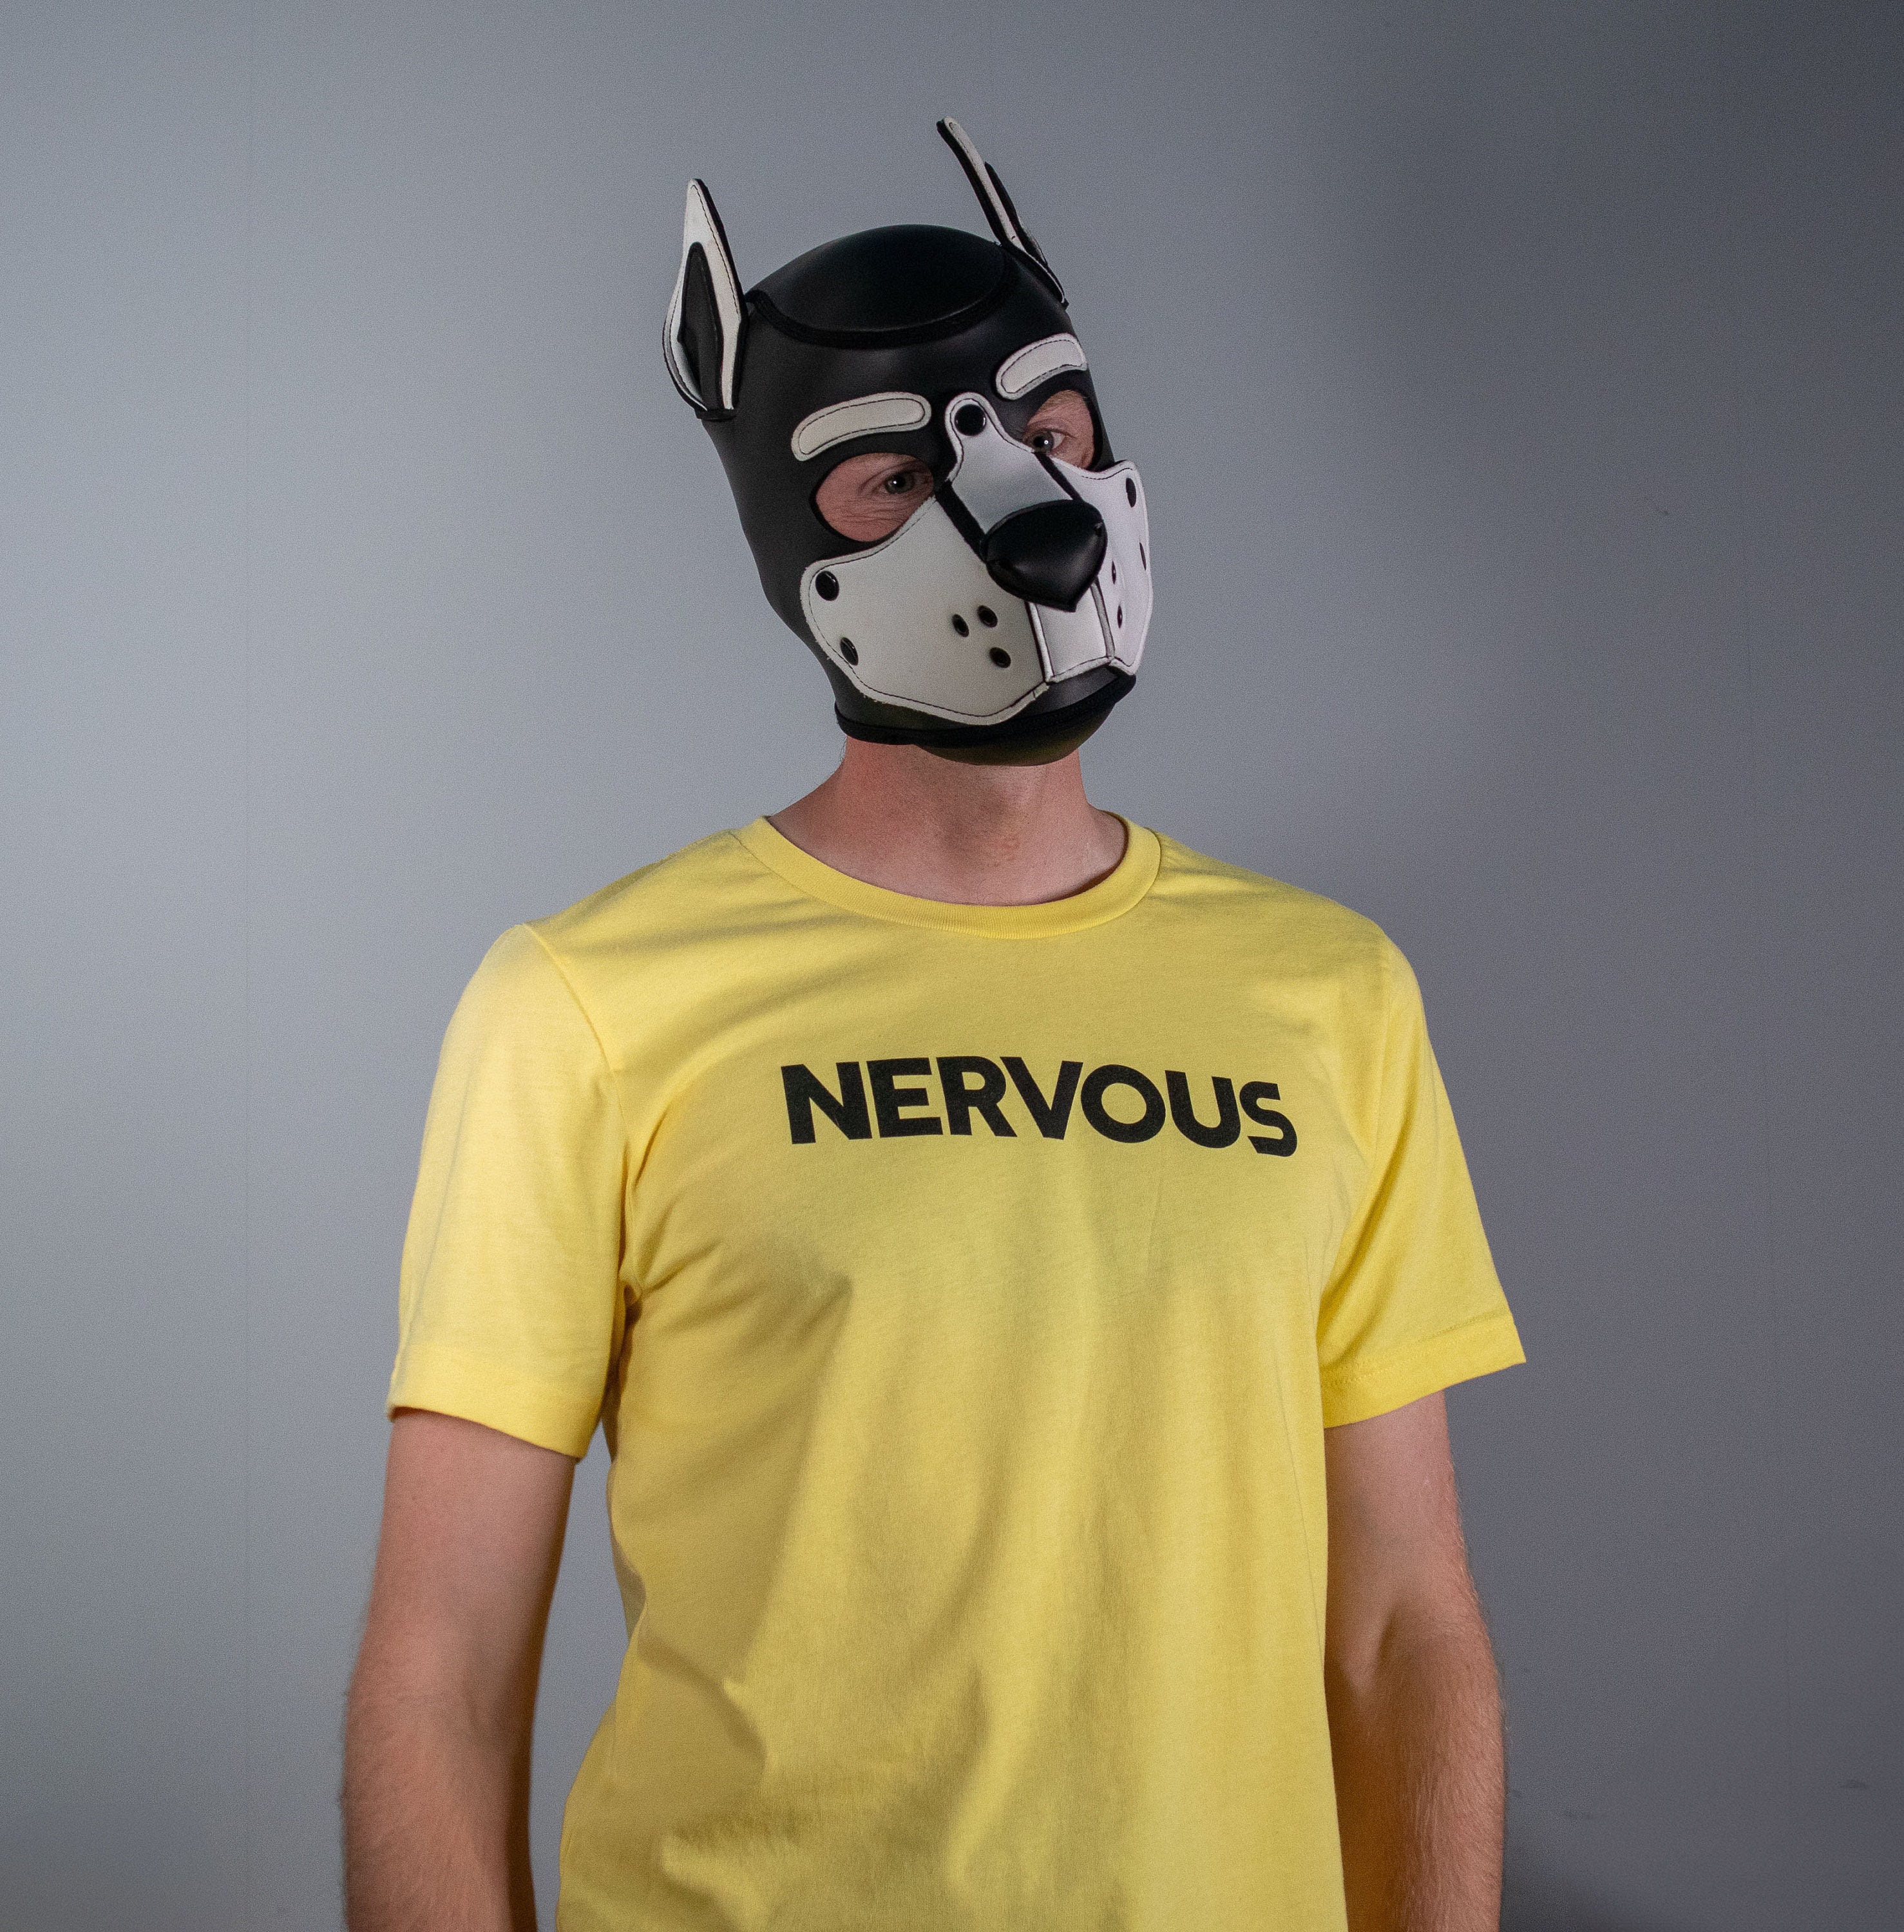 Nervous The Neighbourhood Band Unisex T-Shirt - Teeruto